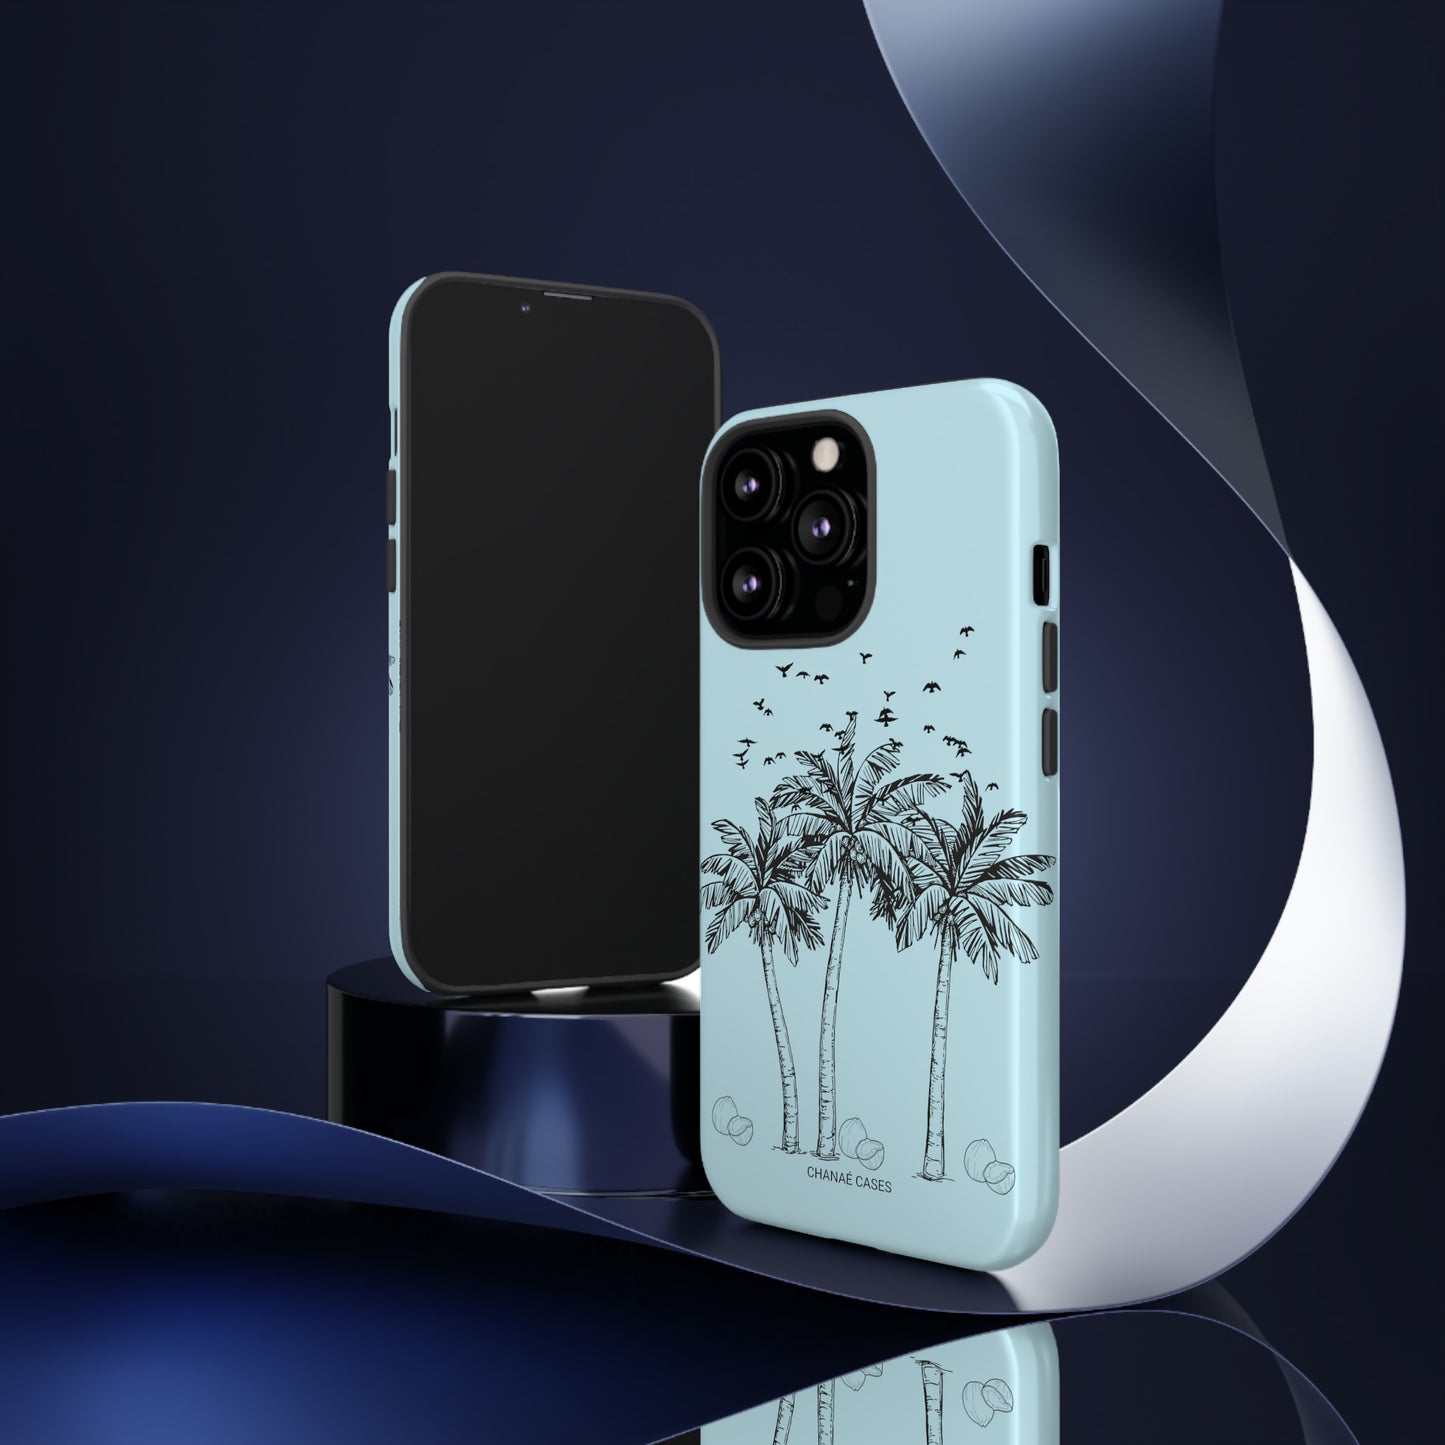 Exotica iPhone "Tough" Case (Light Blue)